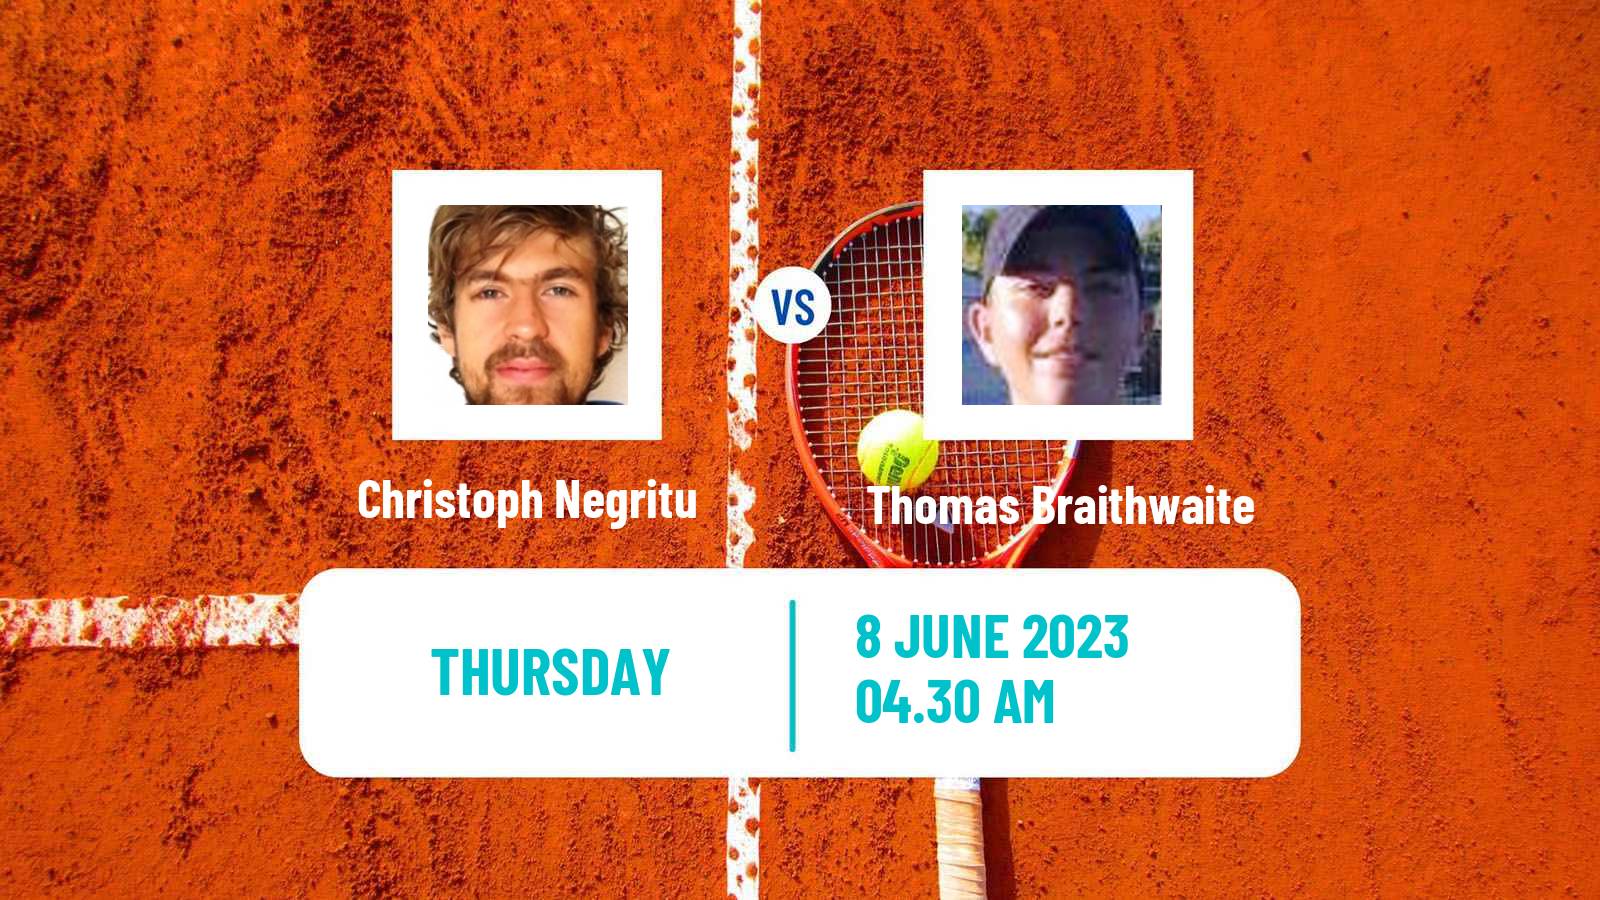 Tennis ITF M15 Monastir 23 Men Christoph Negritu - Thomas Braithwaite